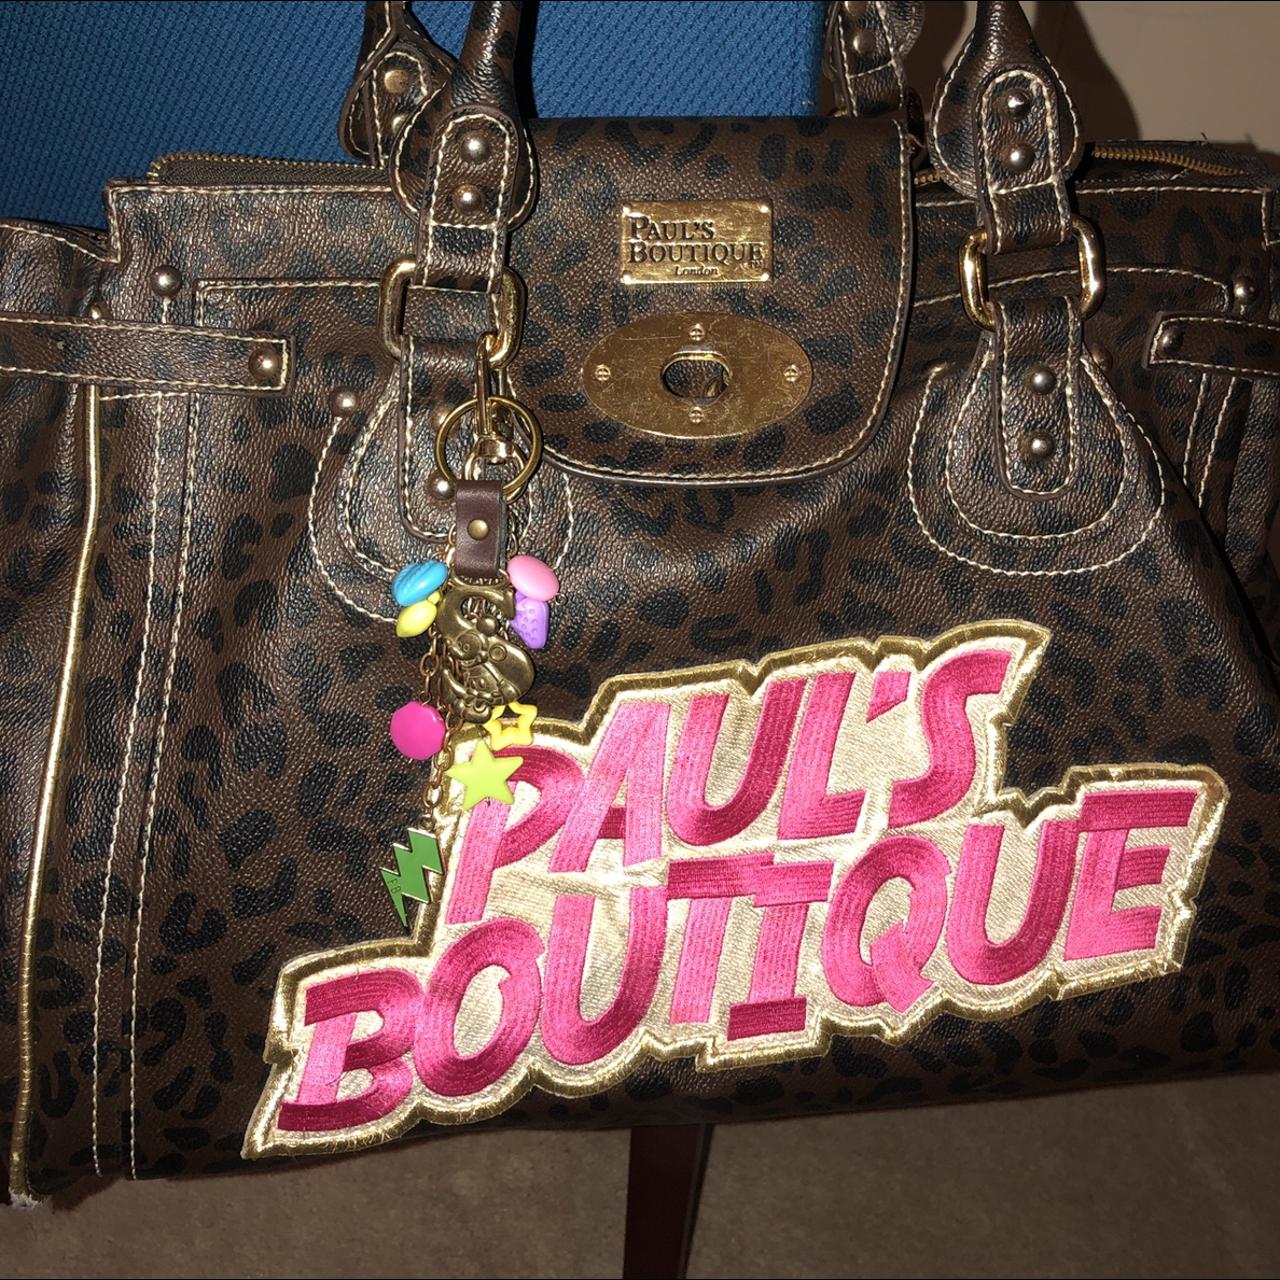 Green Paul's Boutique Bag with Leopard Print - Depop